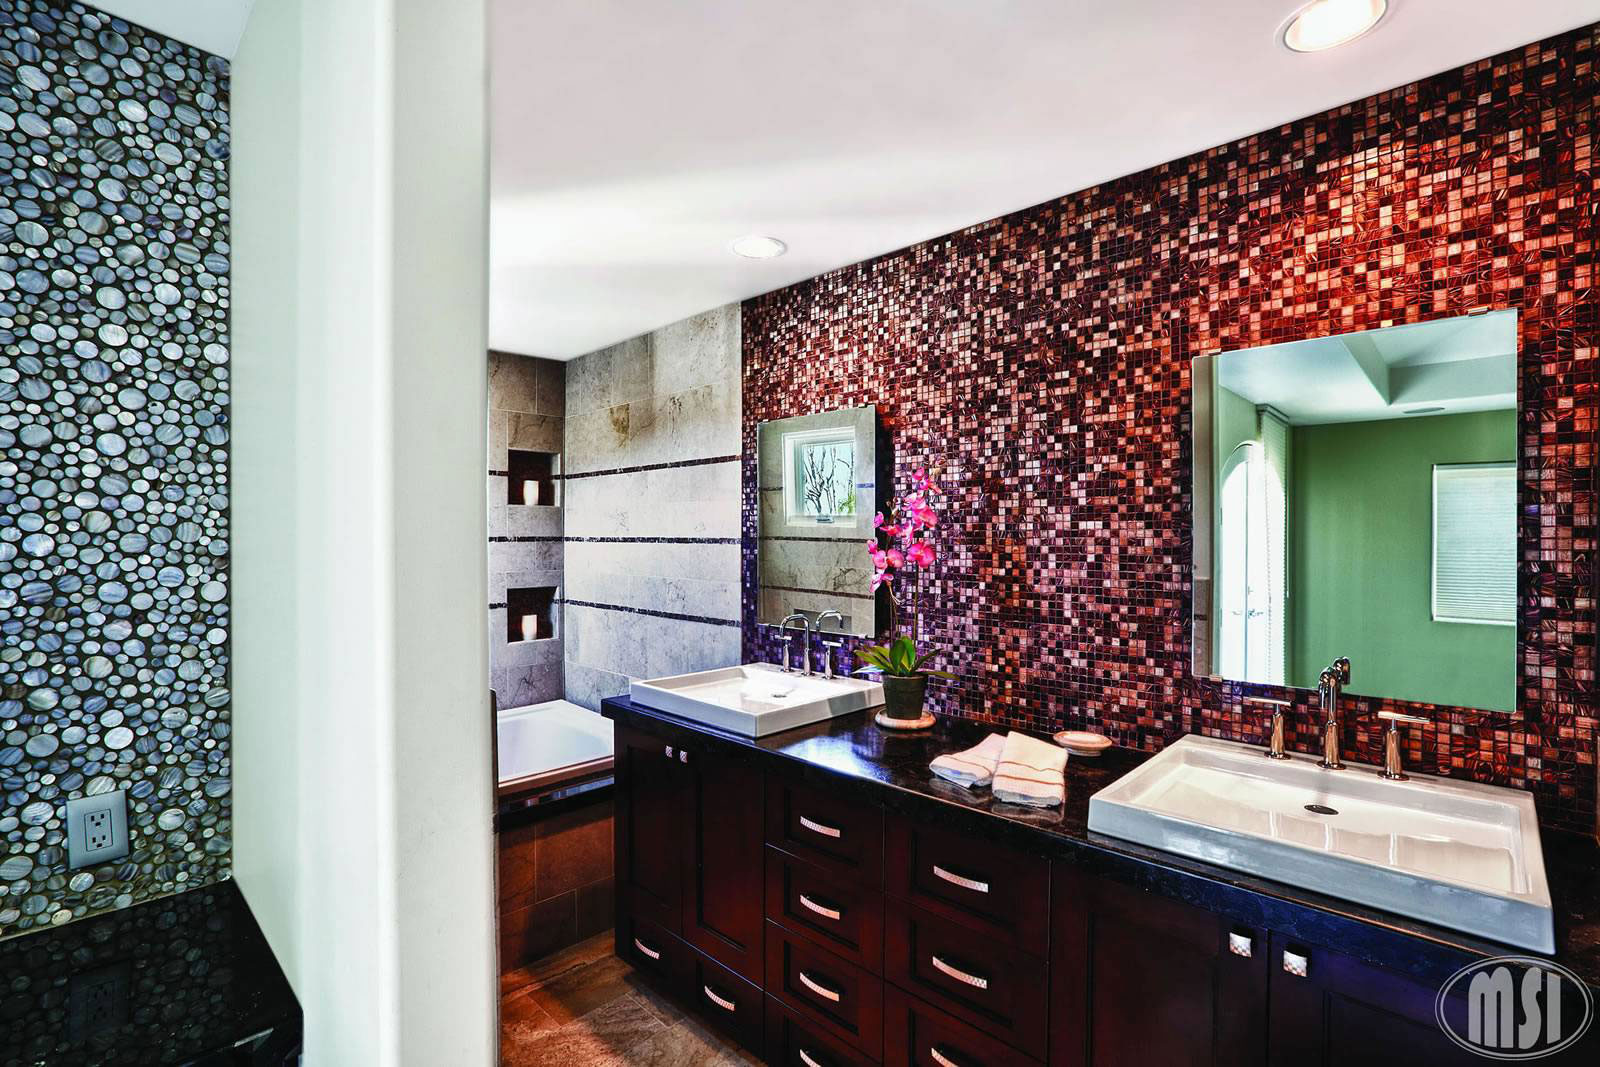 Treasure Trail Iridescent Glass Tile backsplash in bathroom